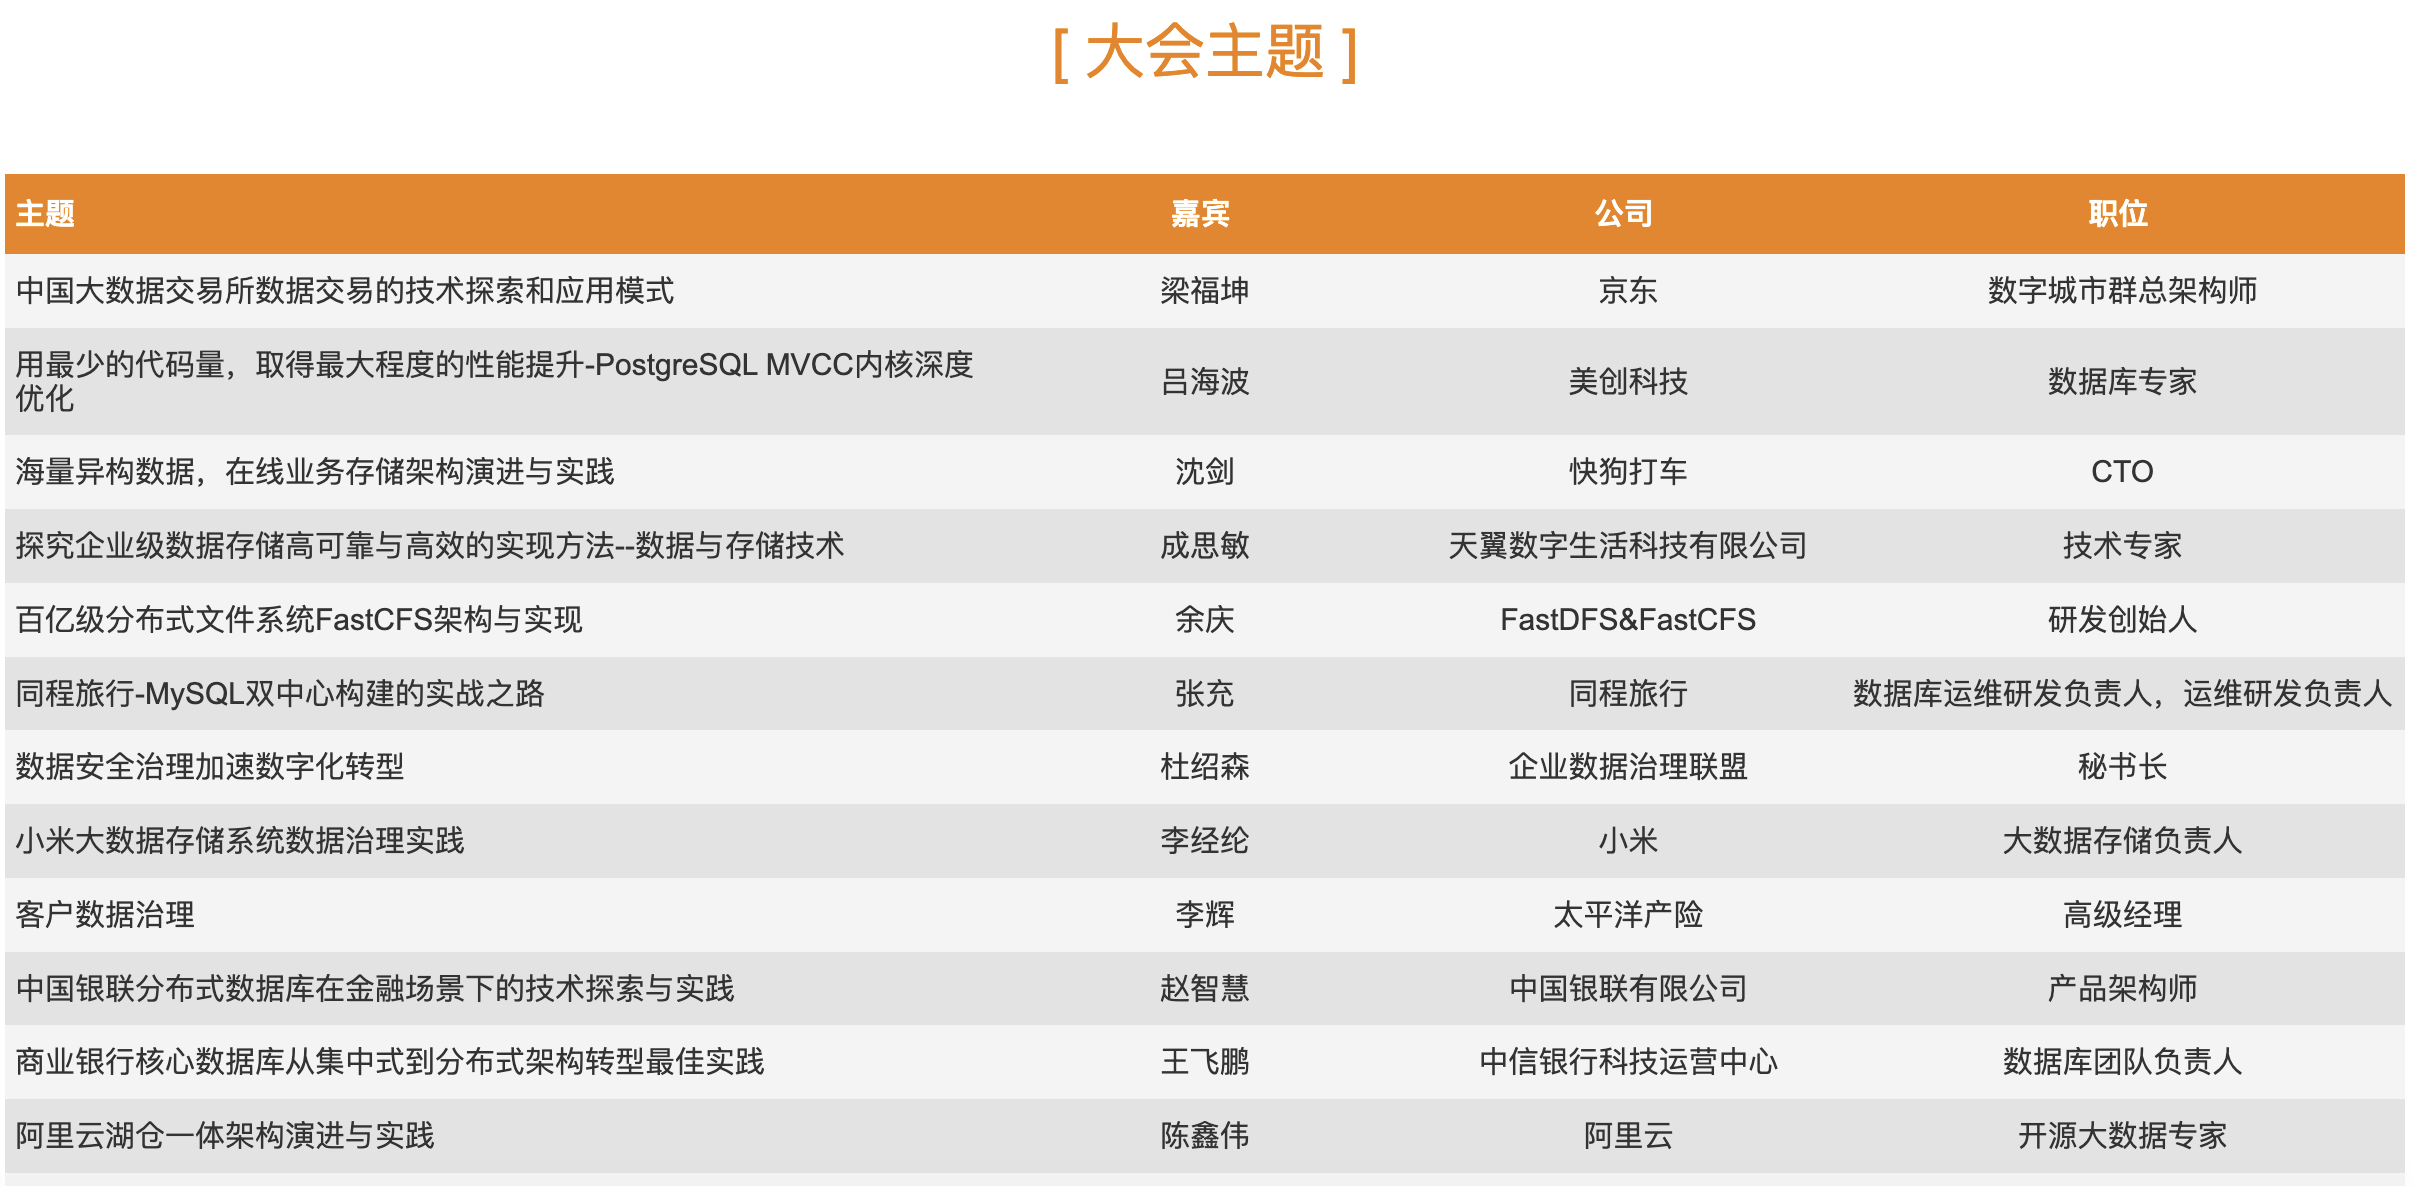 2022DTCC中国数据库技术大会